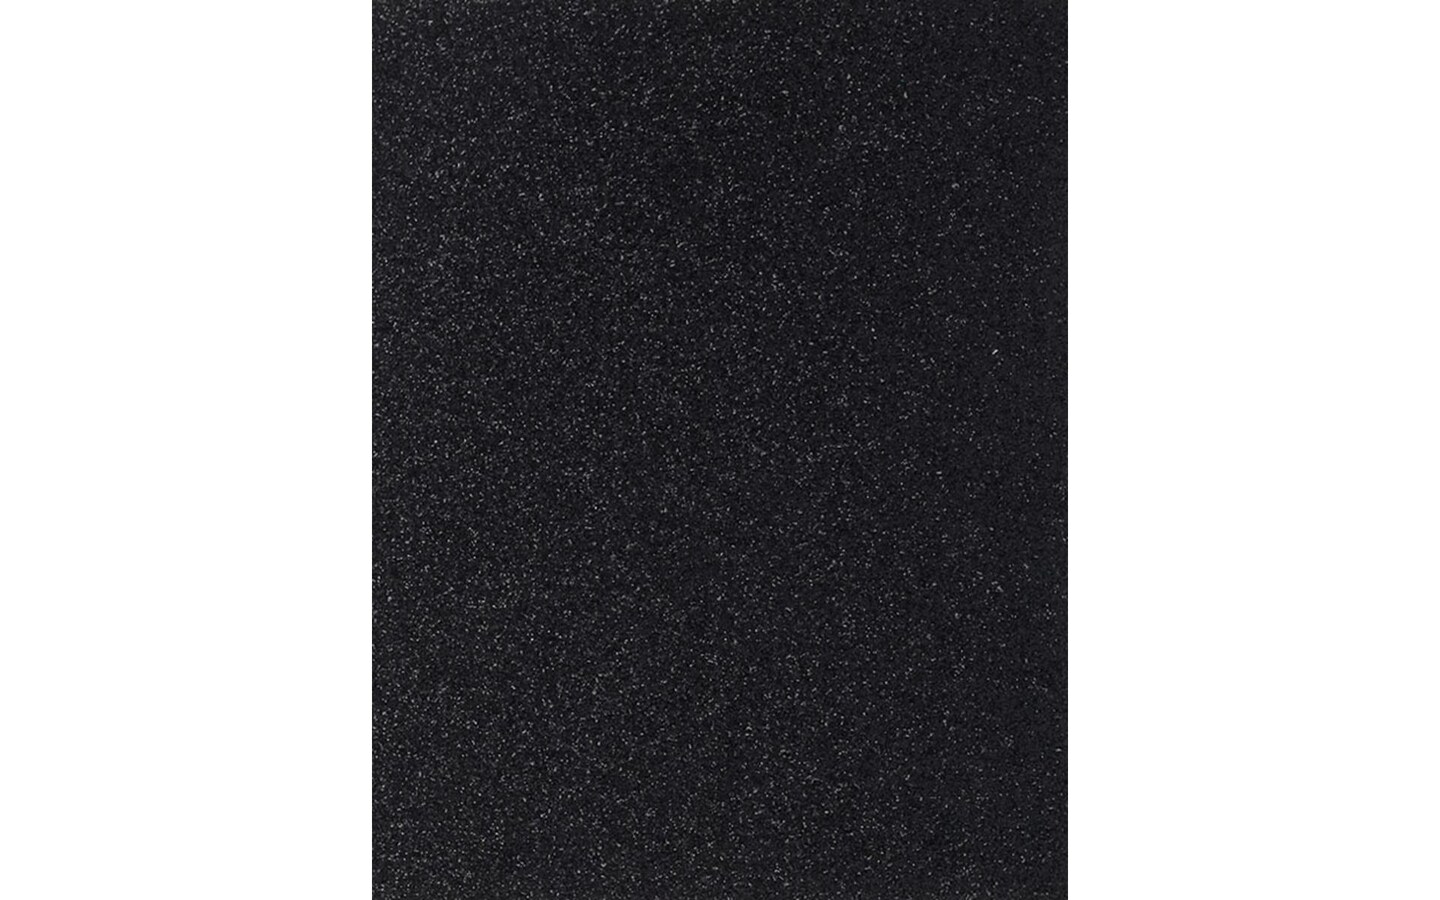 12x12 Black Glitter Cardstock Paper for Scrapbooking, Crafts